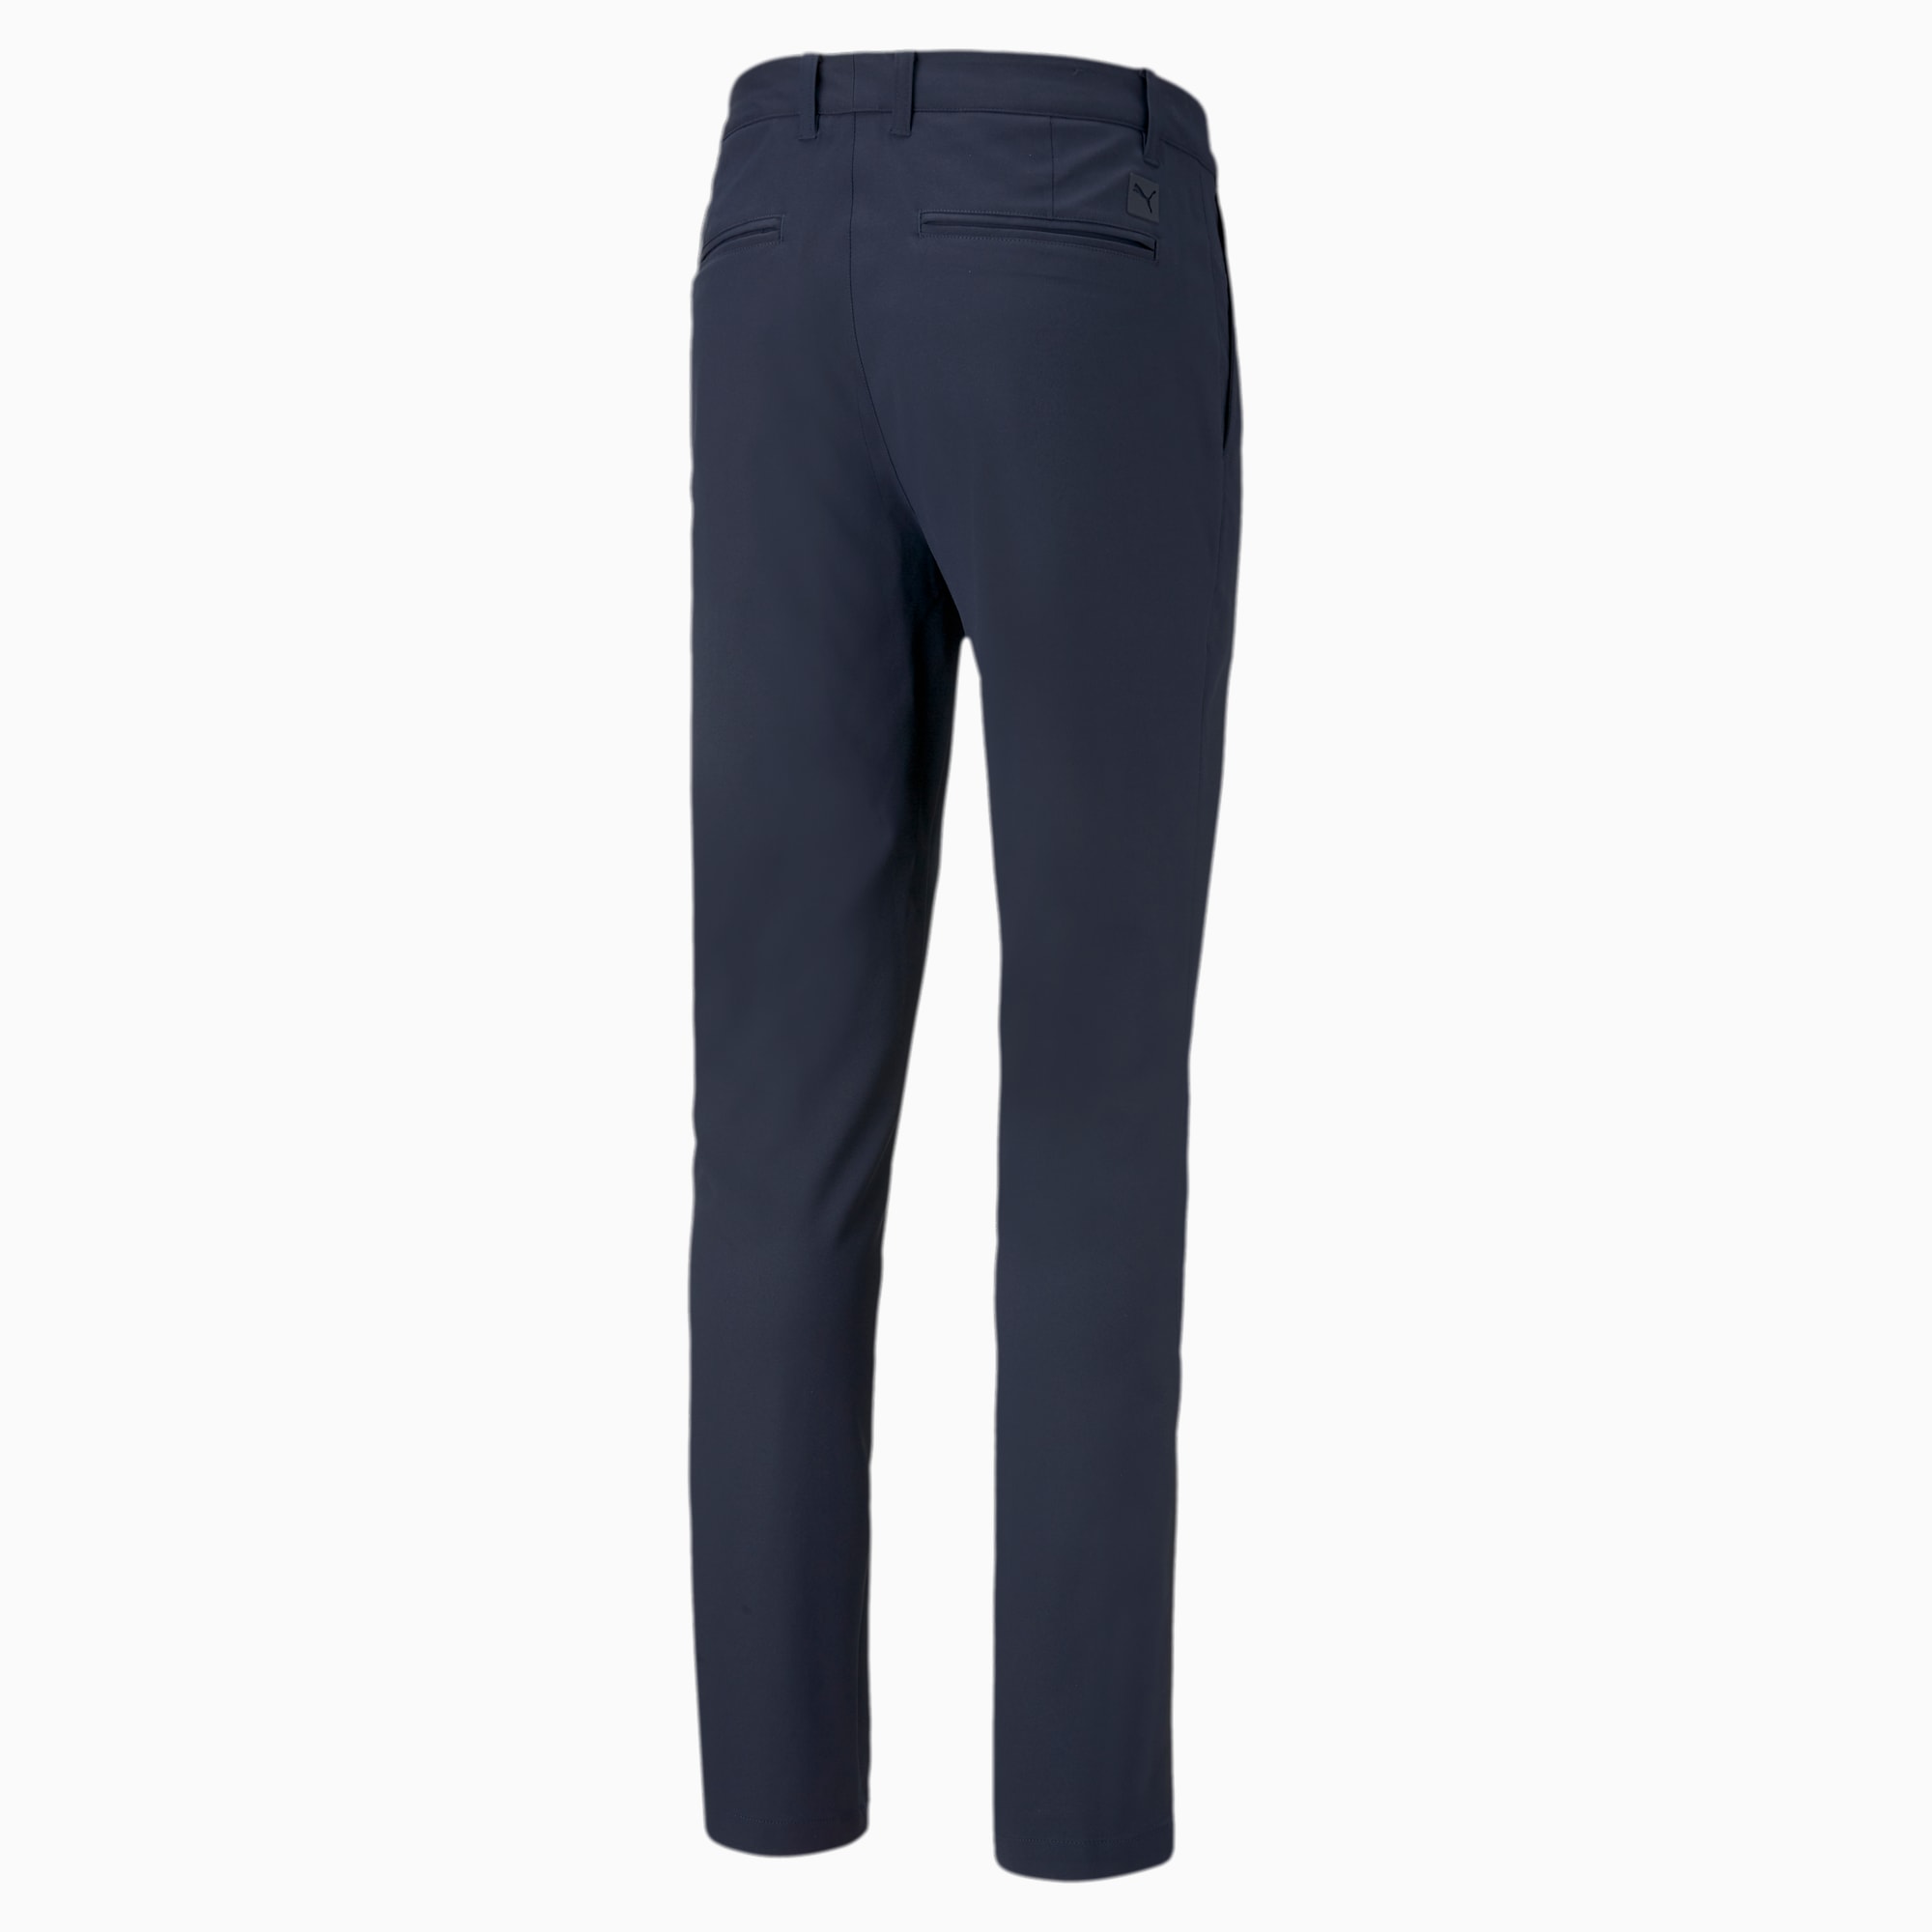 PUMA Dealer Tailored Golf Pants Men, Dark Blue, Size 30/34, Clothing